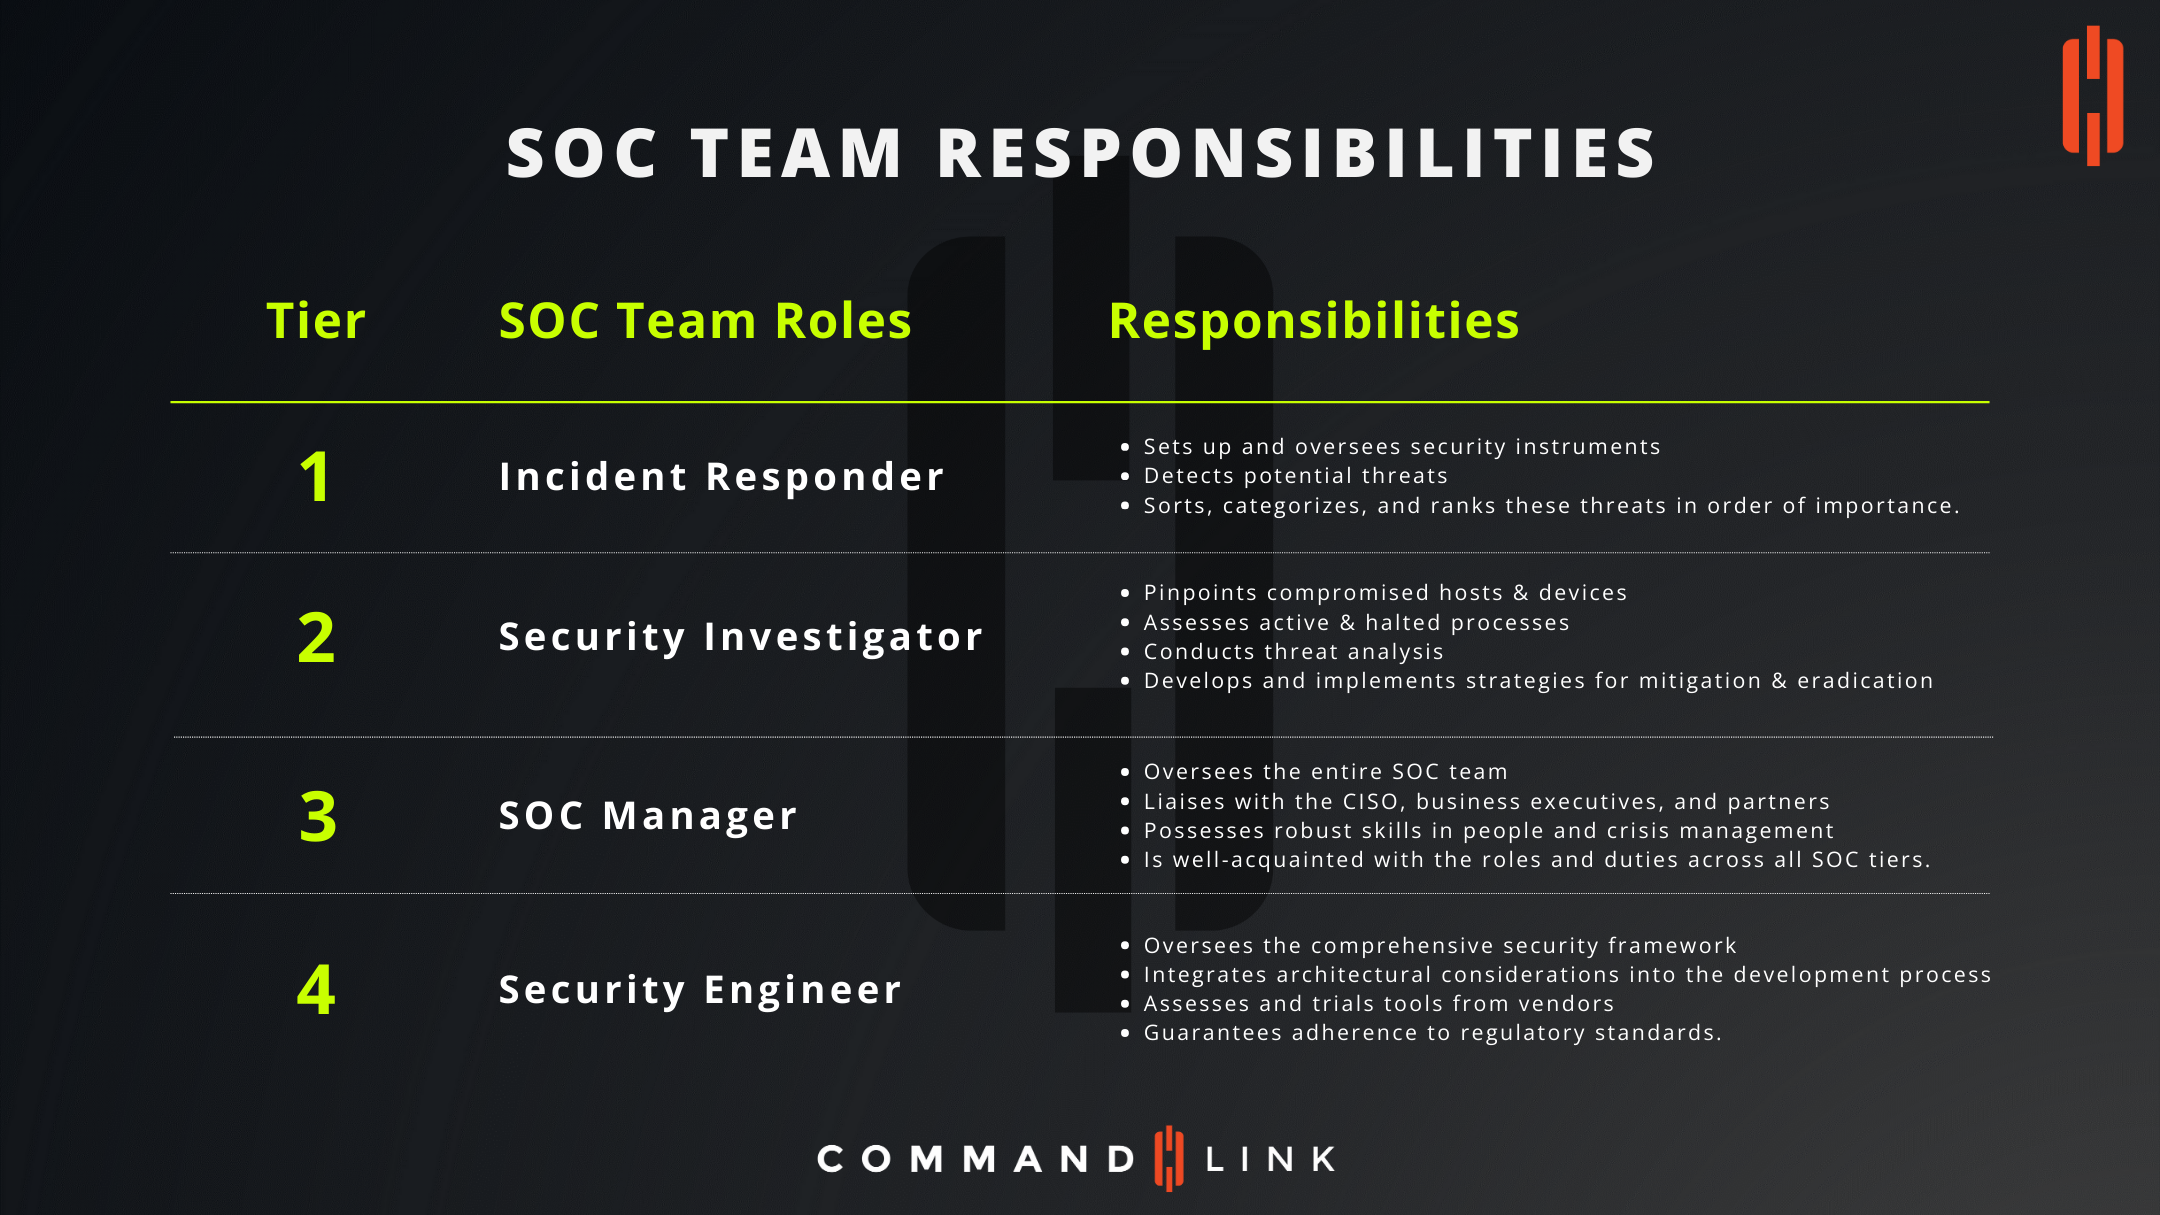 SOC team responsibilities